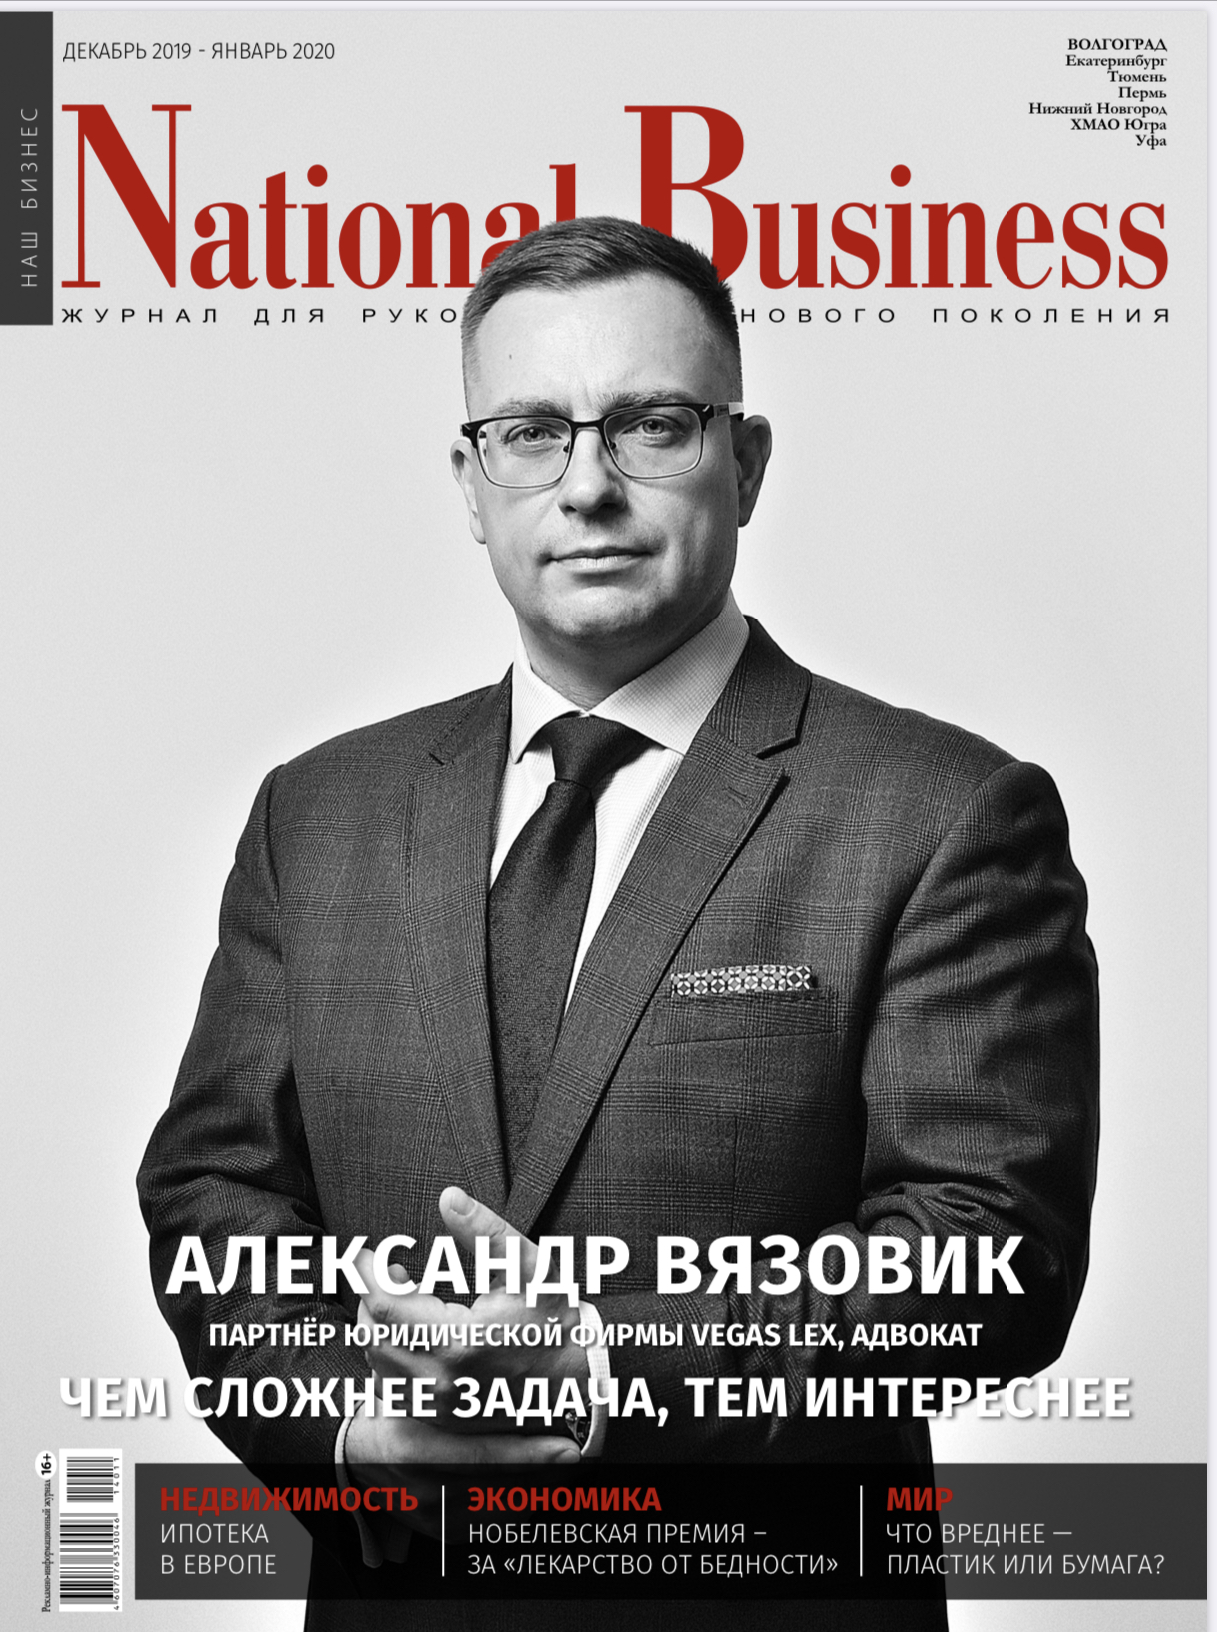 Обложка_National Business.jpg